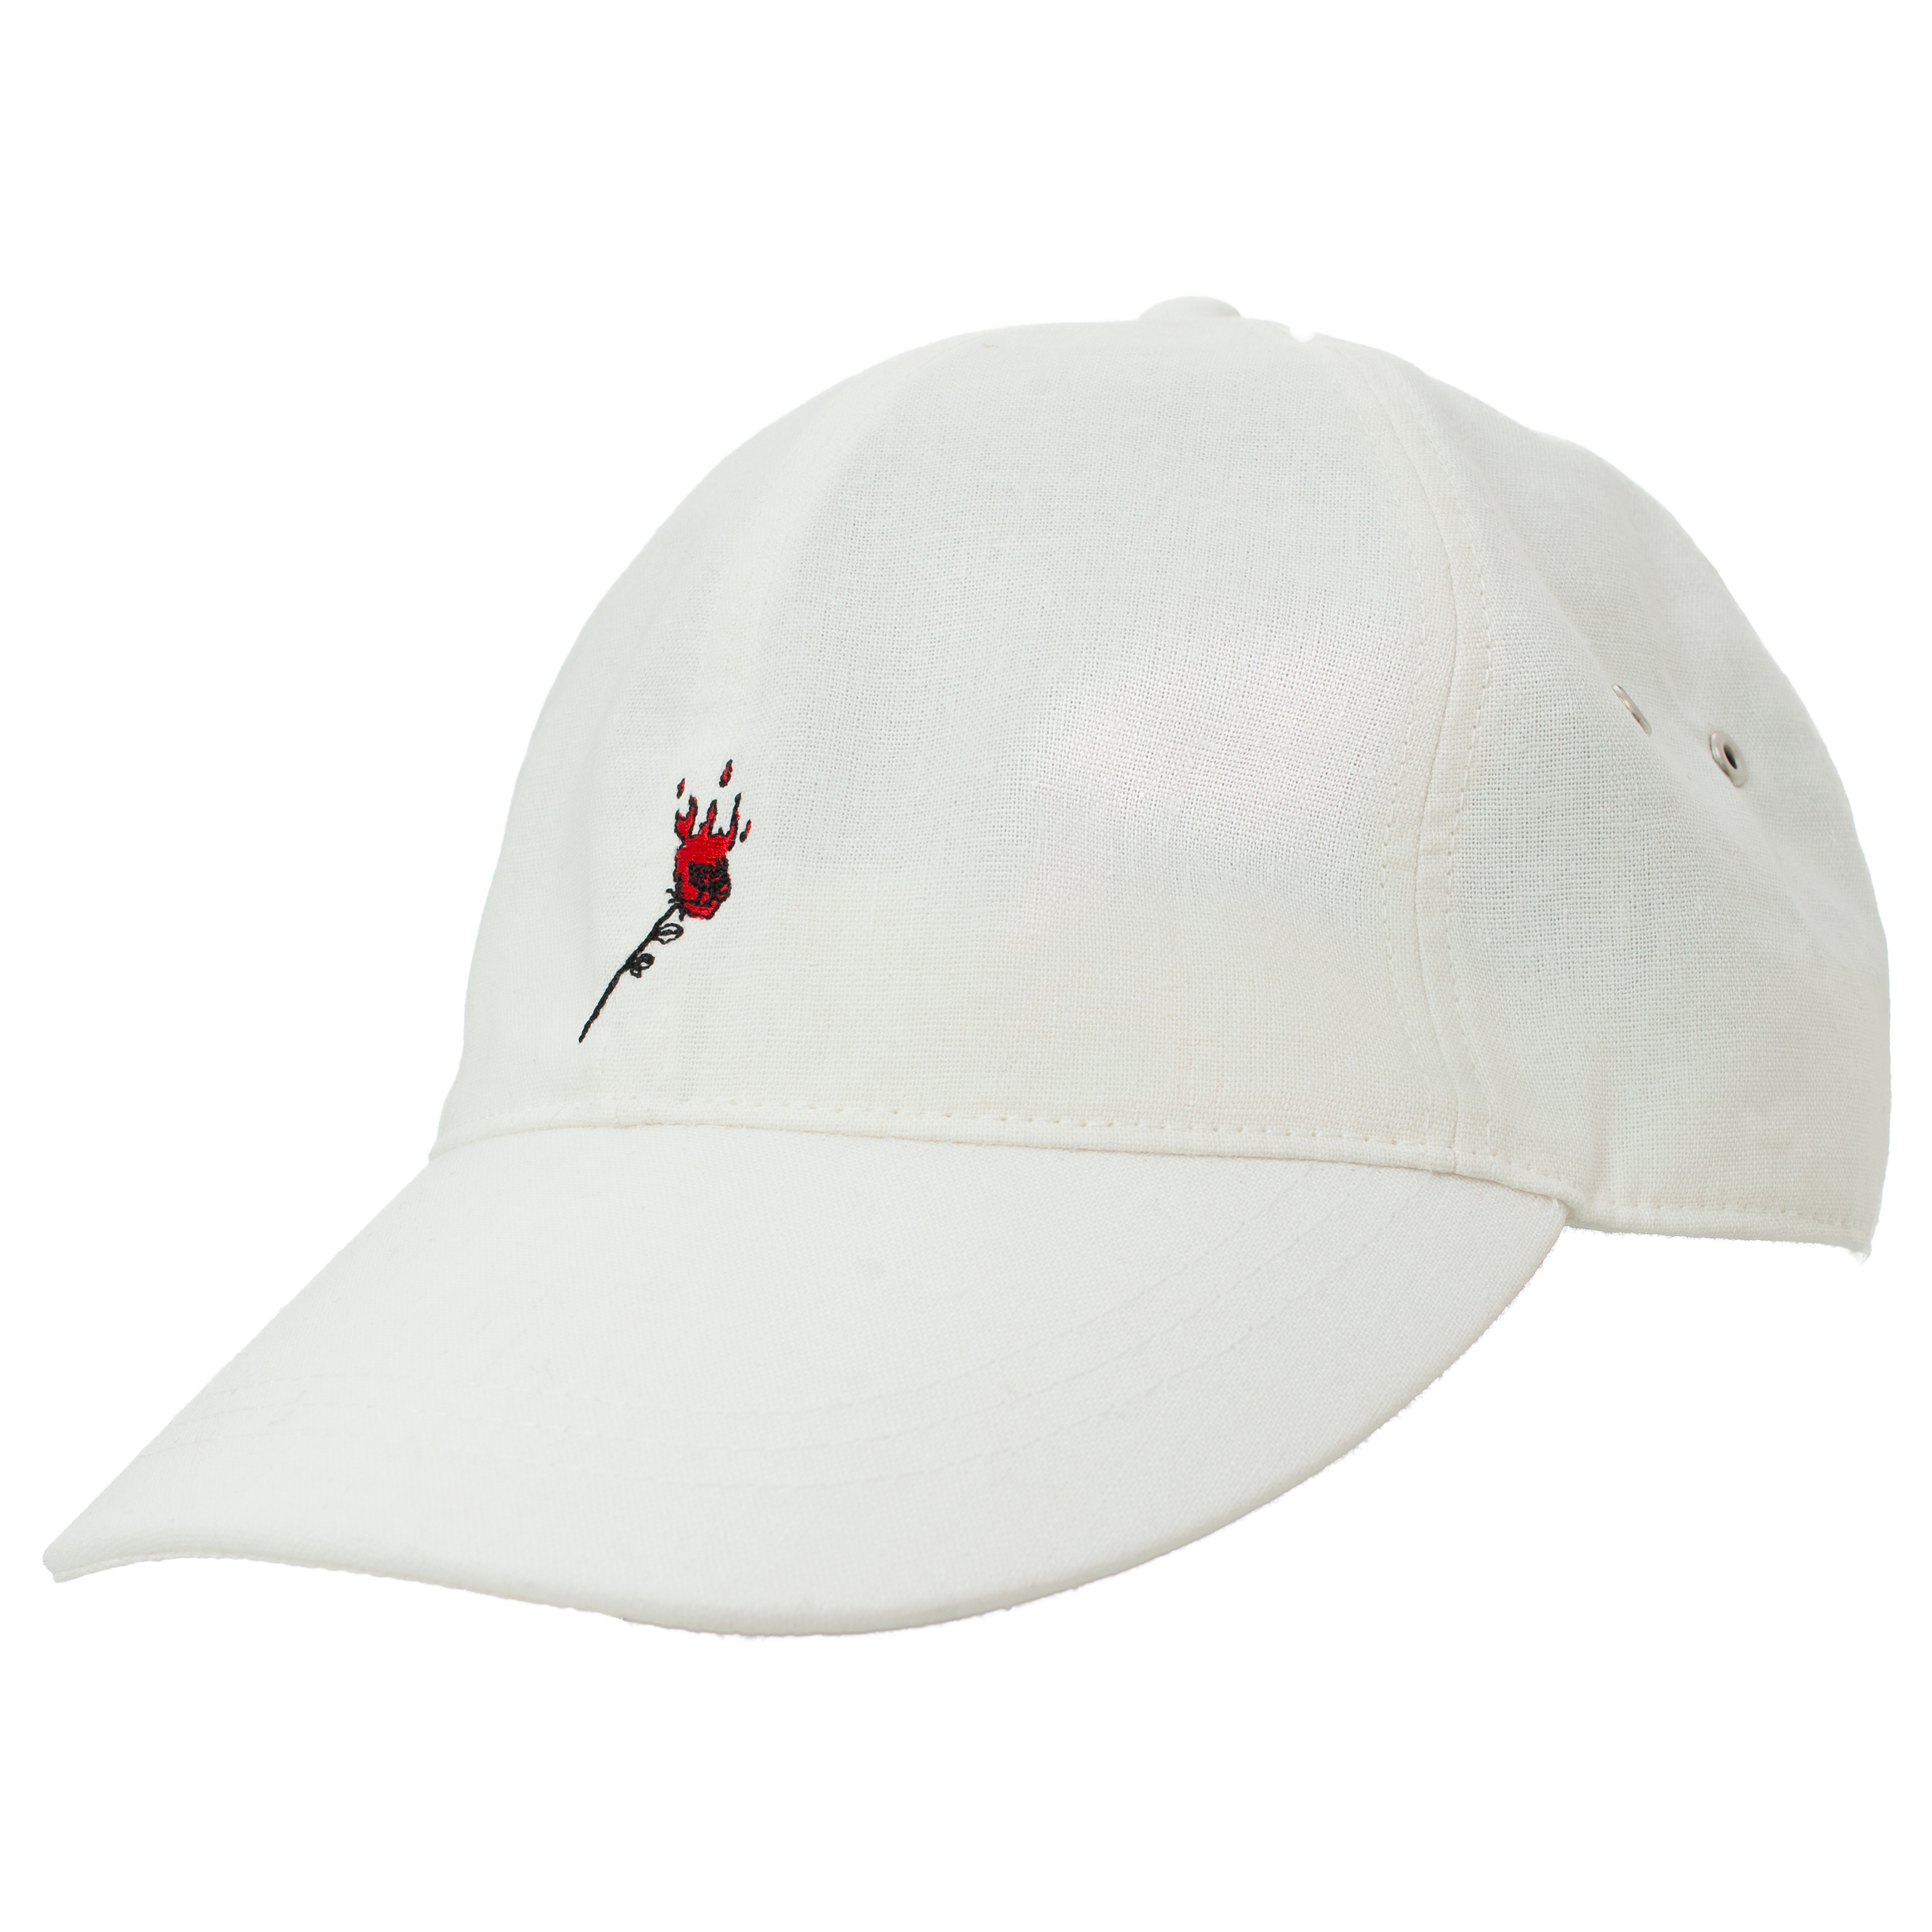 Белая кепка с вышивкой Undercover UC1C4H02-1/OFF WHITE, размер One Size